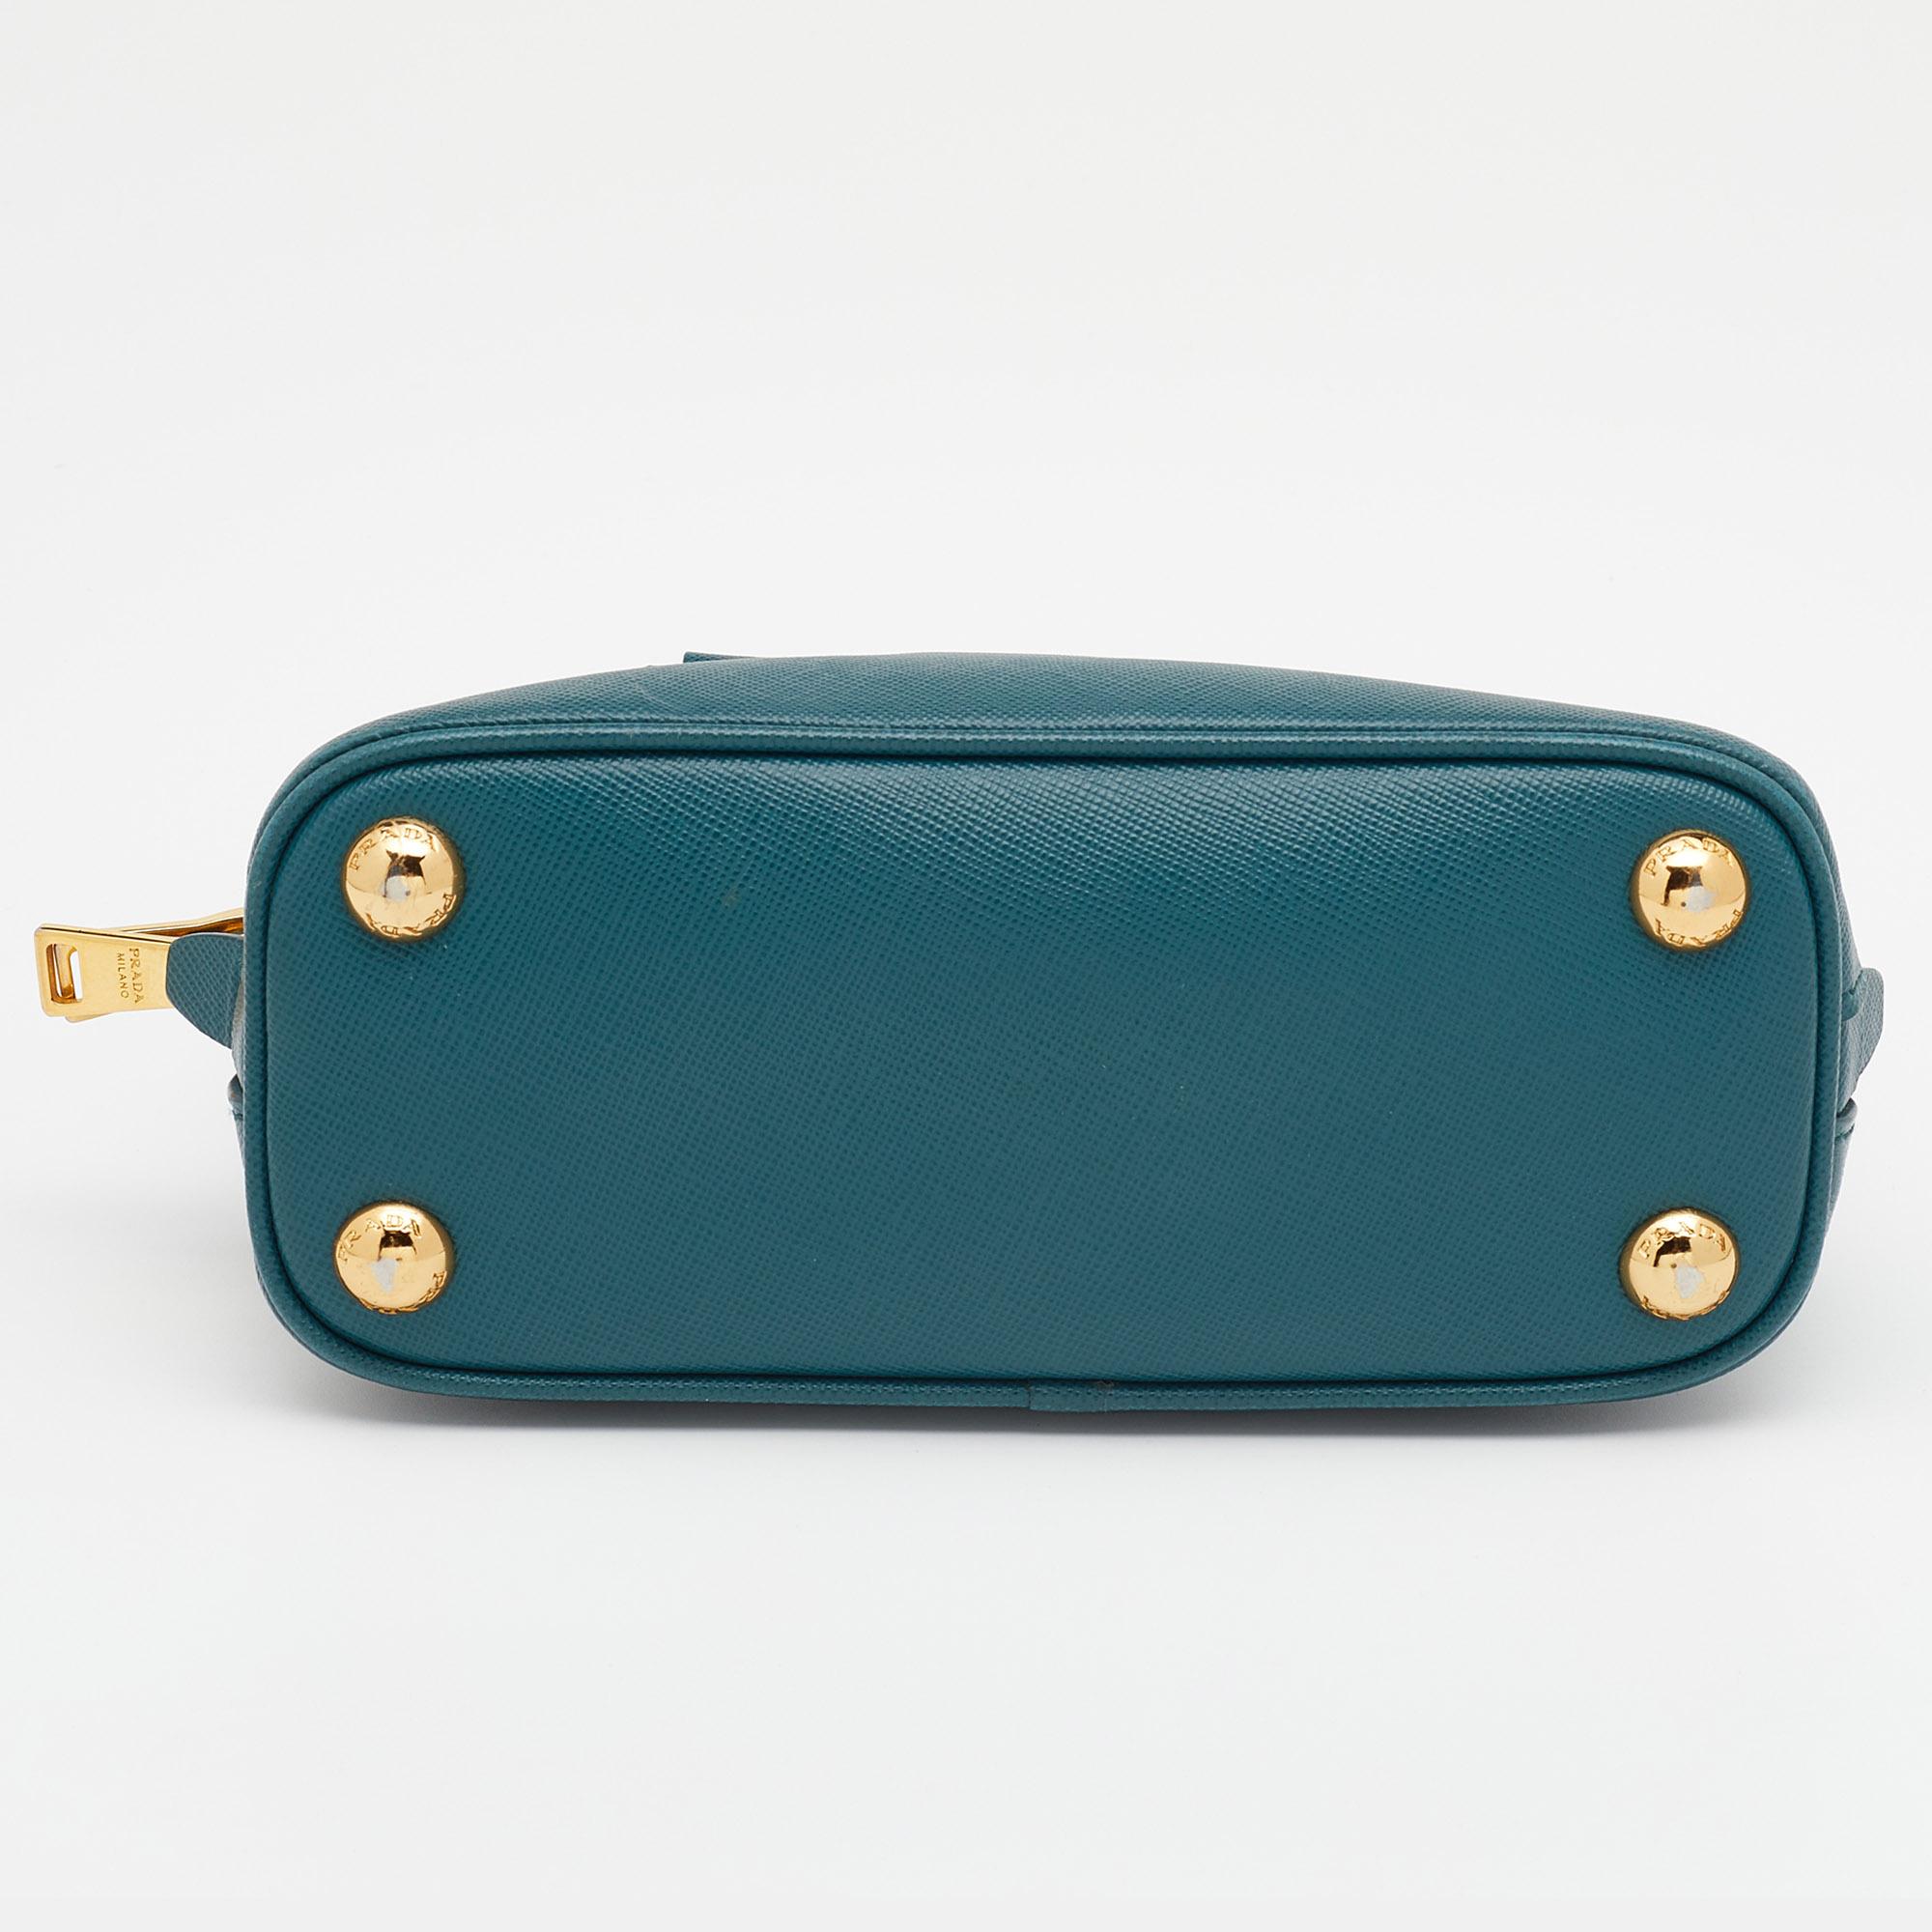 prada green purse